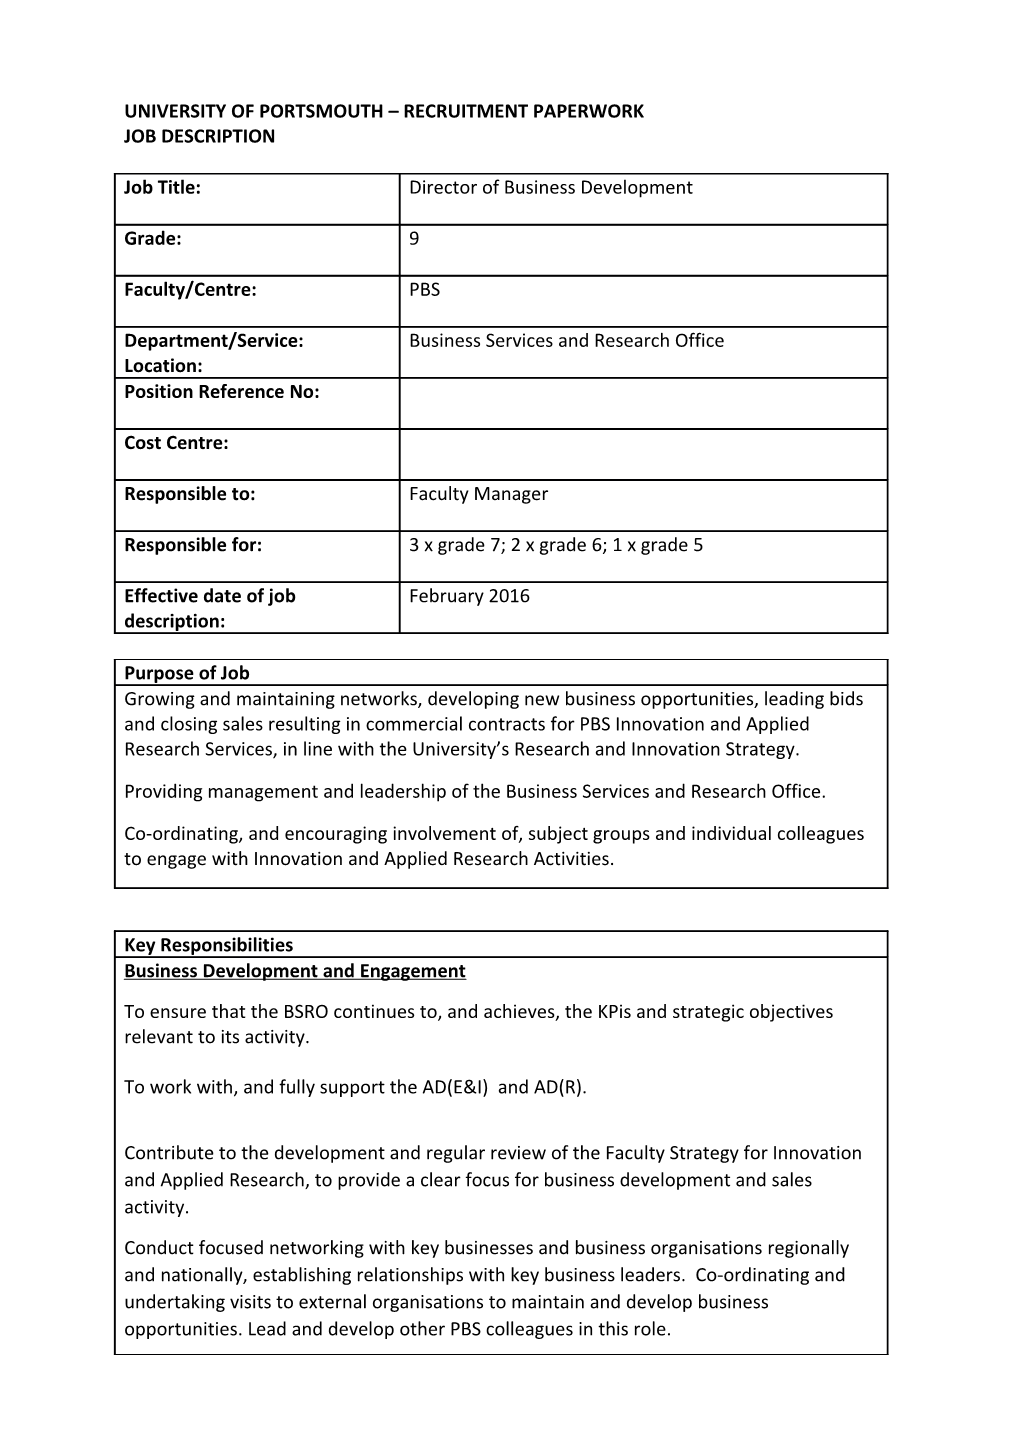 University of Portsmouth Recruitment Paperwork